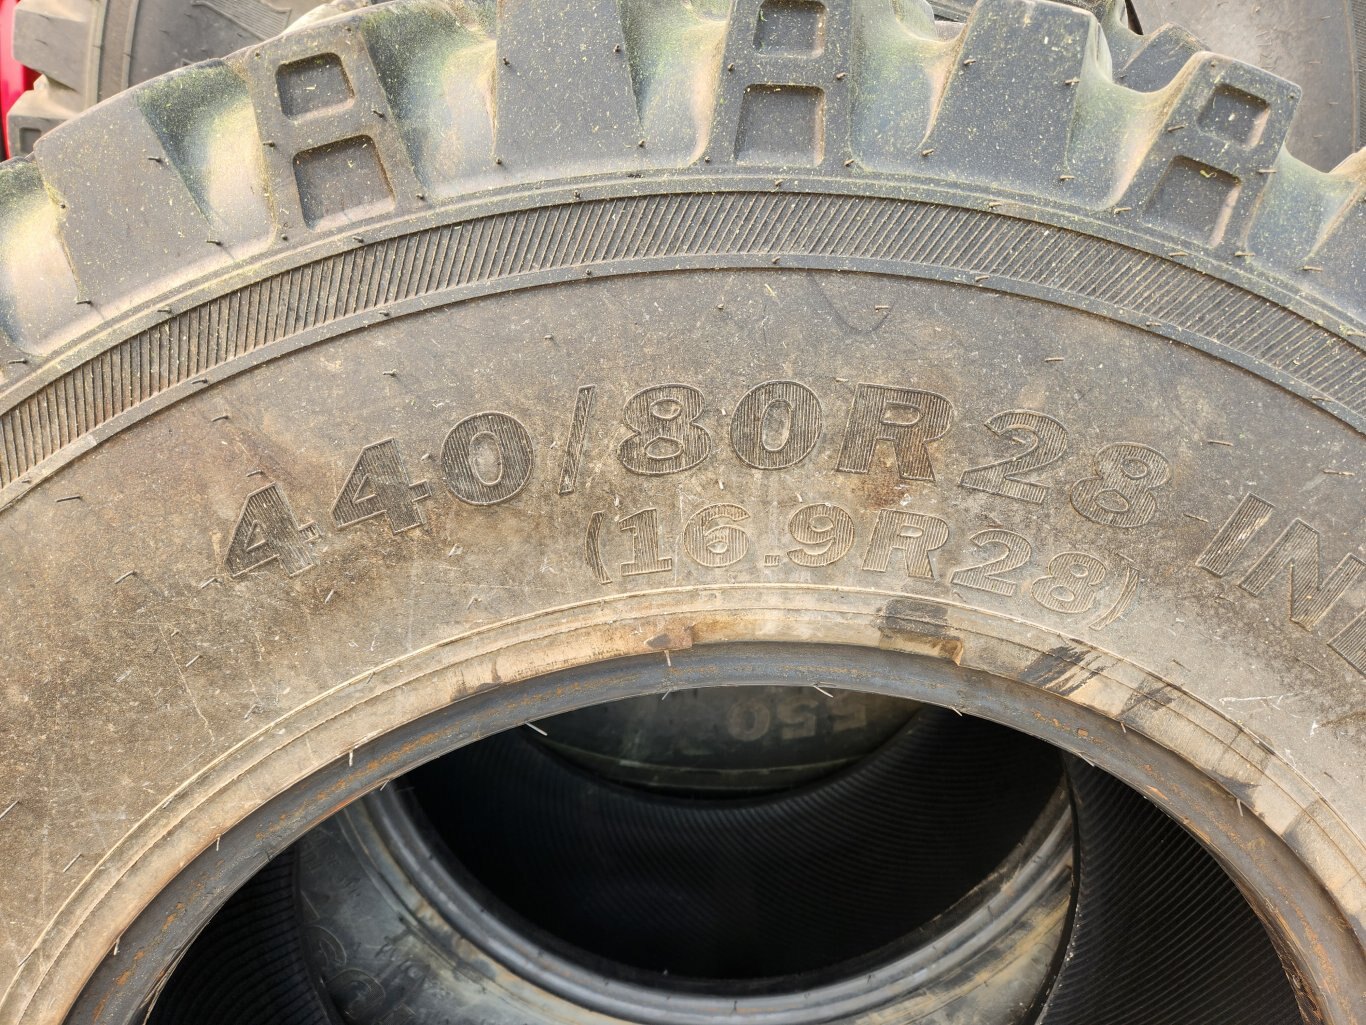 540/80R38 & 440/80R28 Alliance MultiUse 550 tires